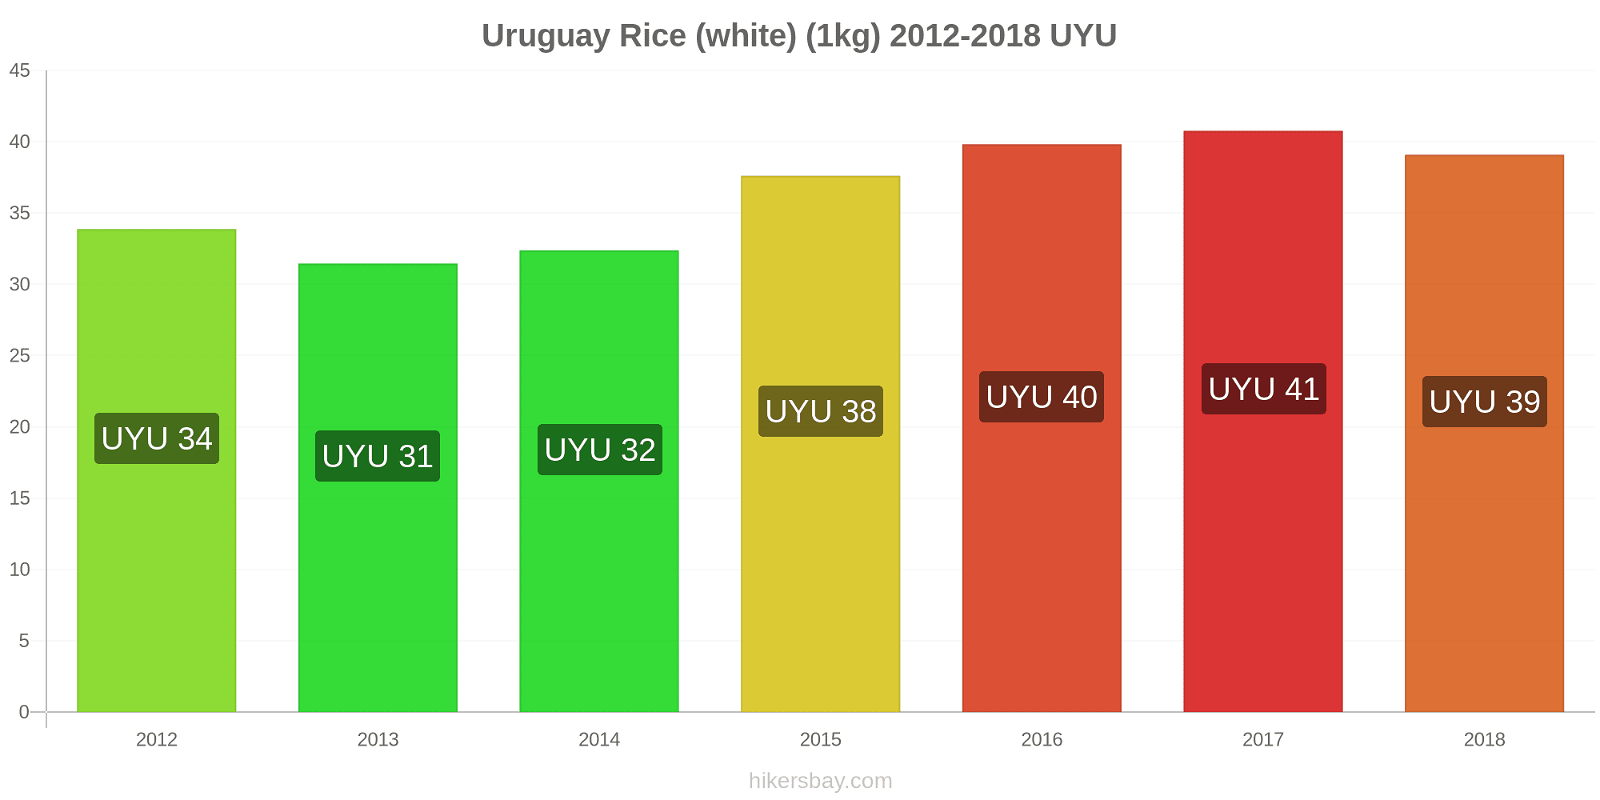 Uruguay price changes Kilo of white rice hikersbay.com